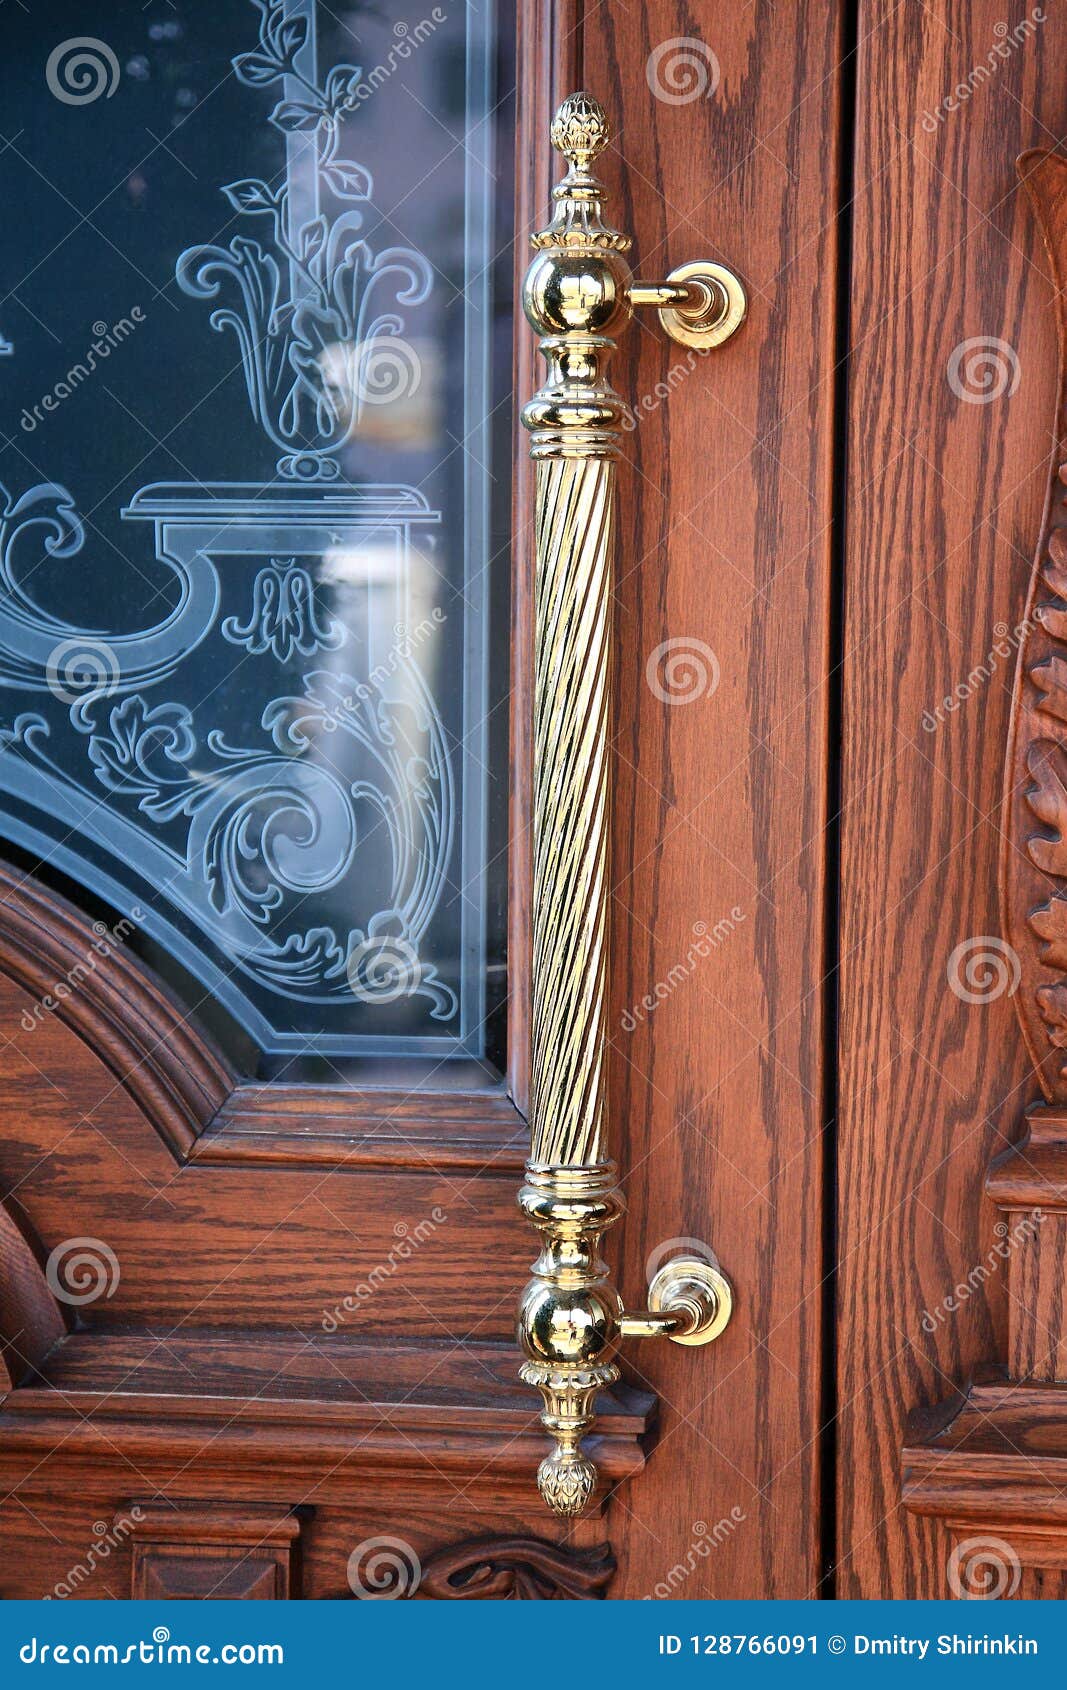 accesorios de puerta adecuados para gabinetes accesorios de puerta cómodas kit de tiradores de puerta retro tirador de puerta guardarropas muebles estilo chino Tirador de puerta cobre antiguo 